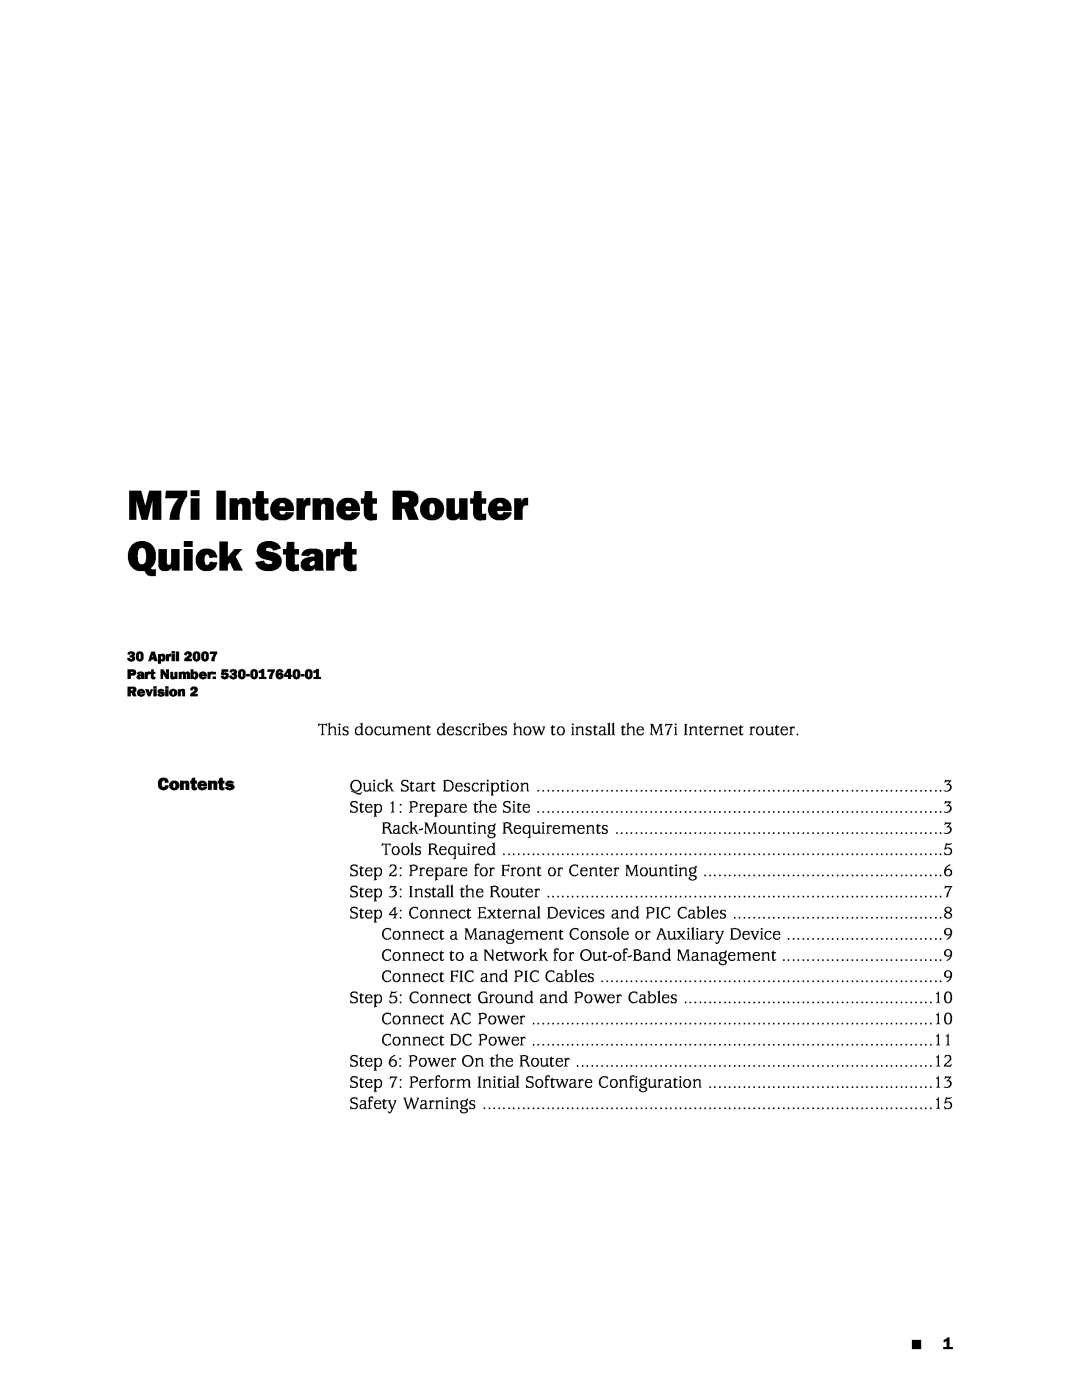 Juniper Networks quick start M7i Internet Router Quick Start, Contents 